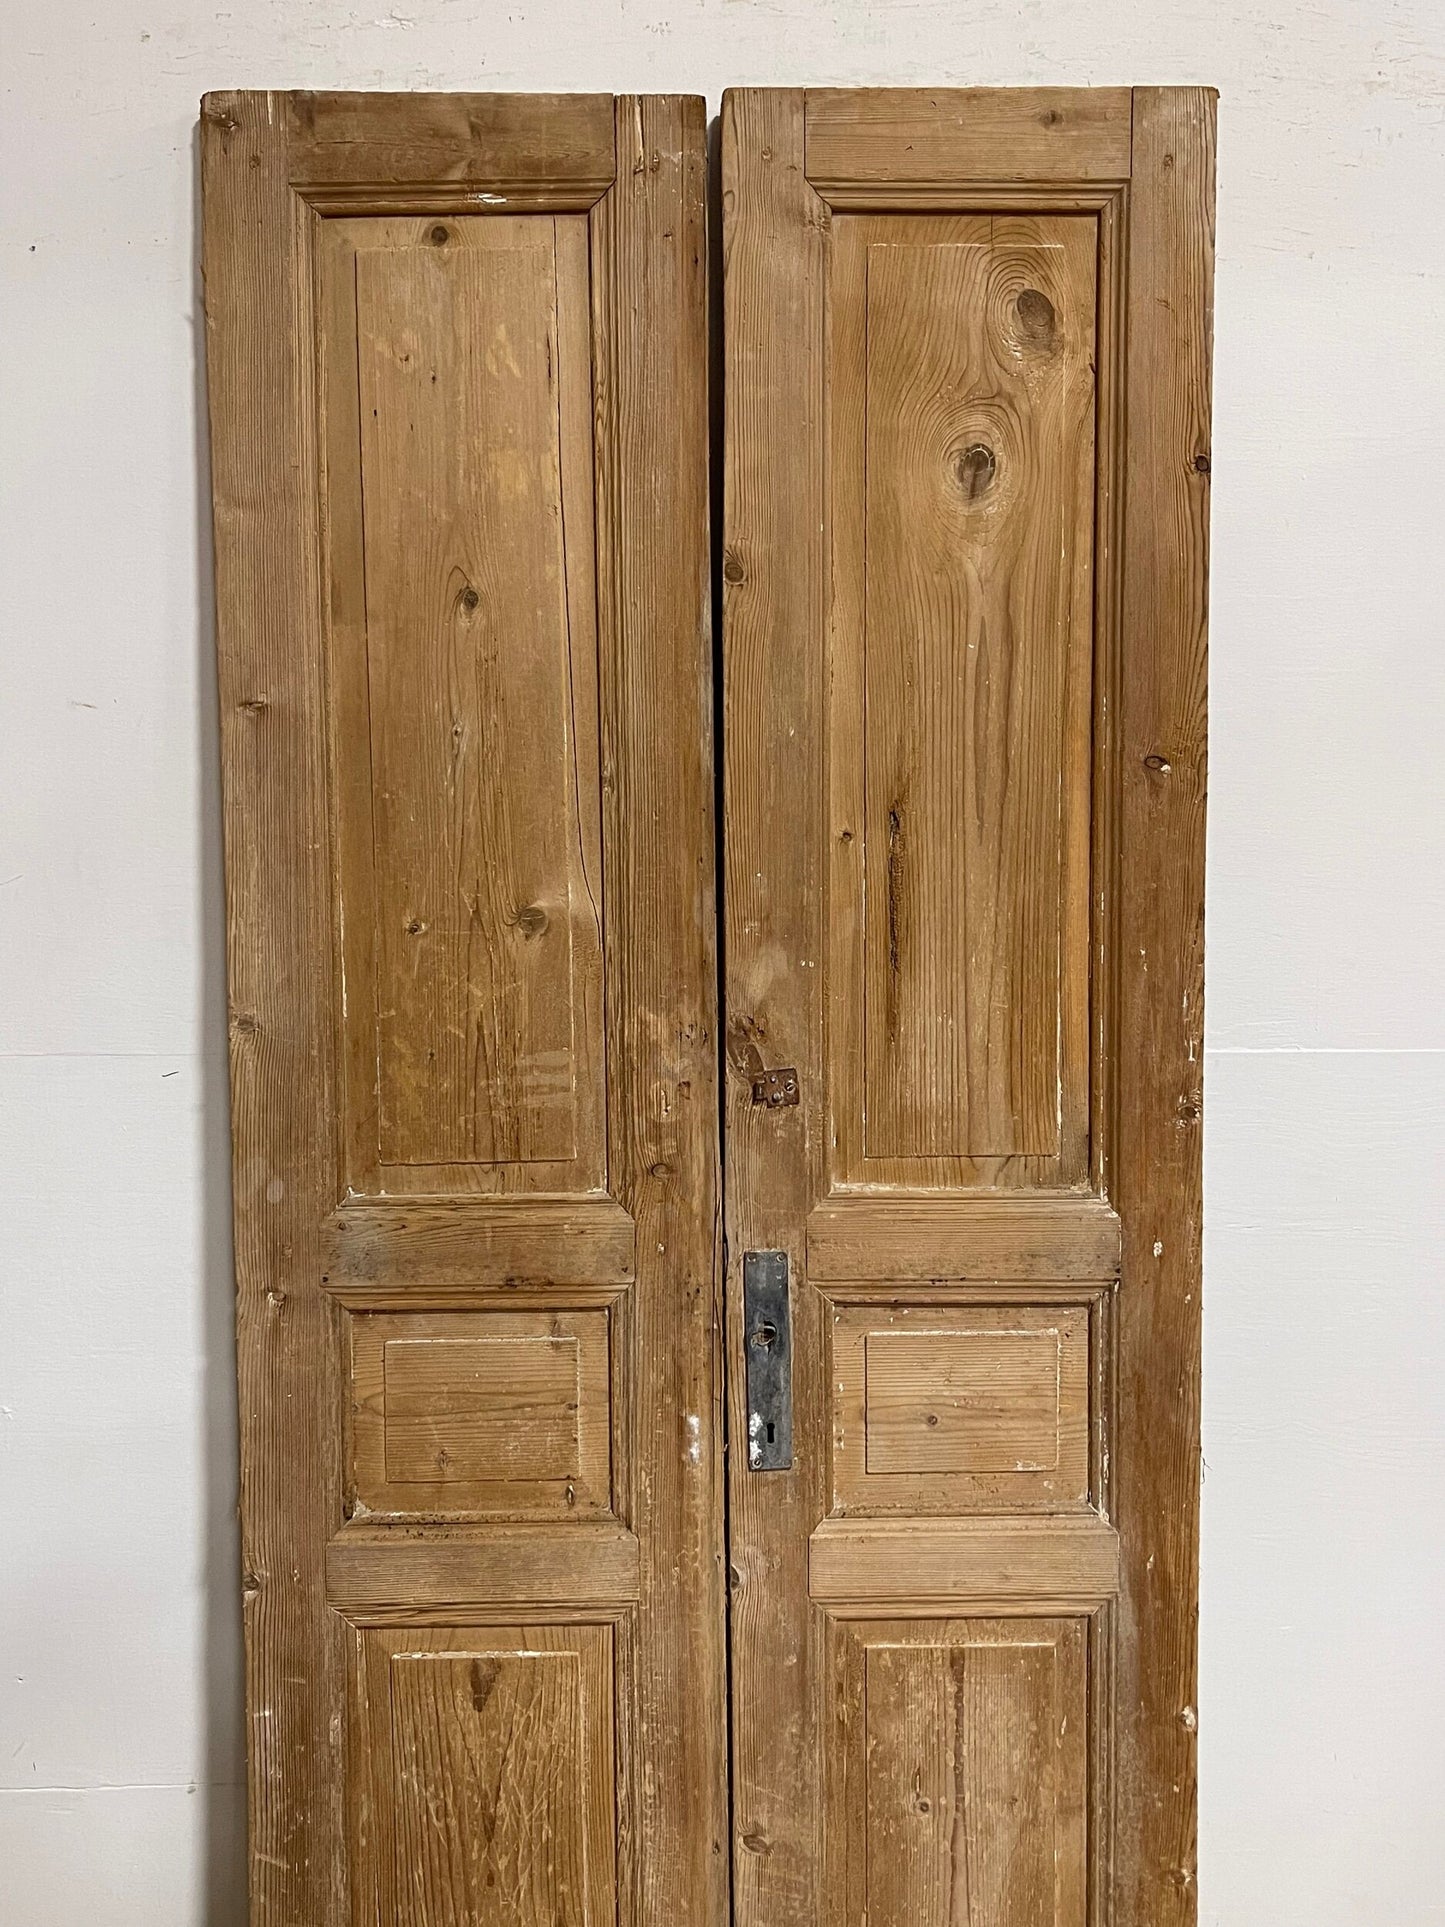 Antique French panel doors (84 x 37) I082